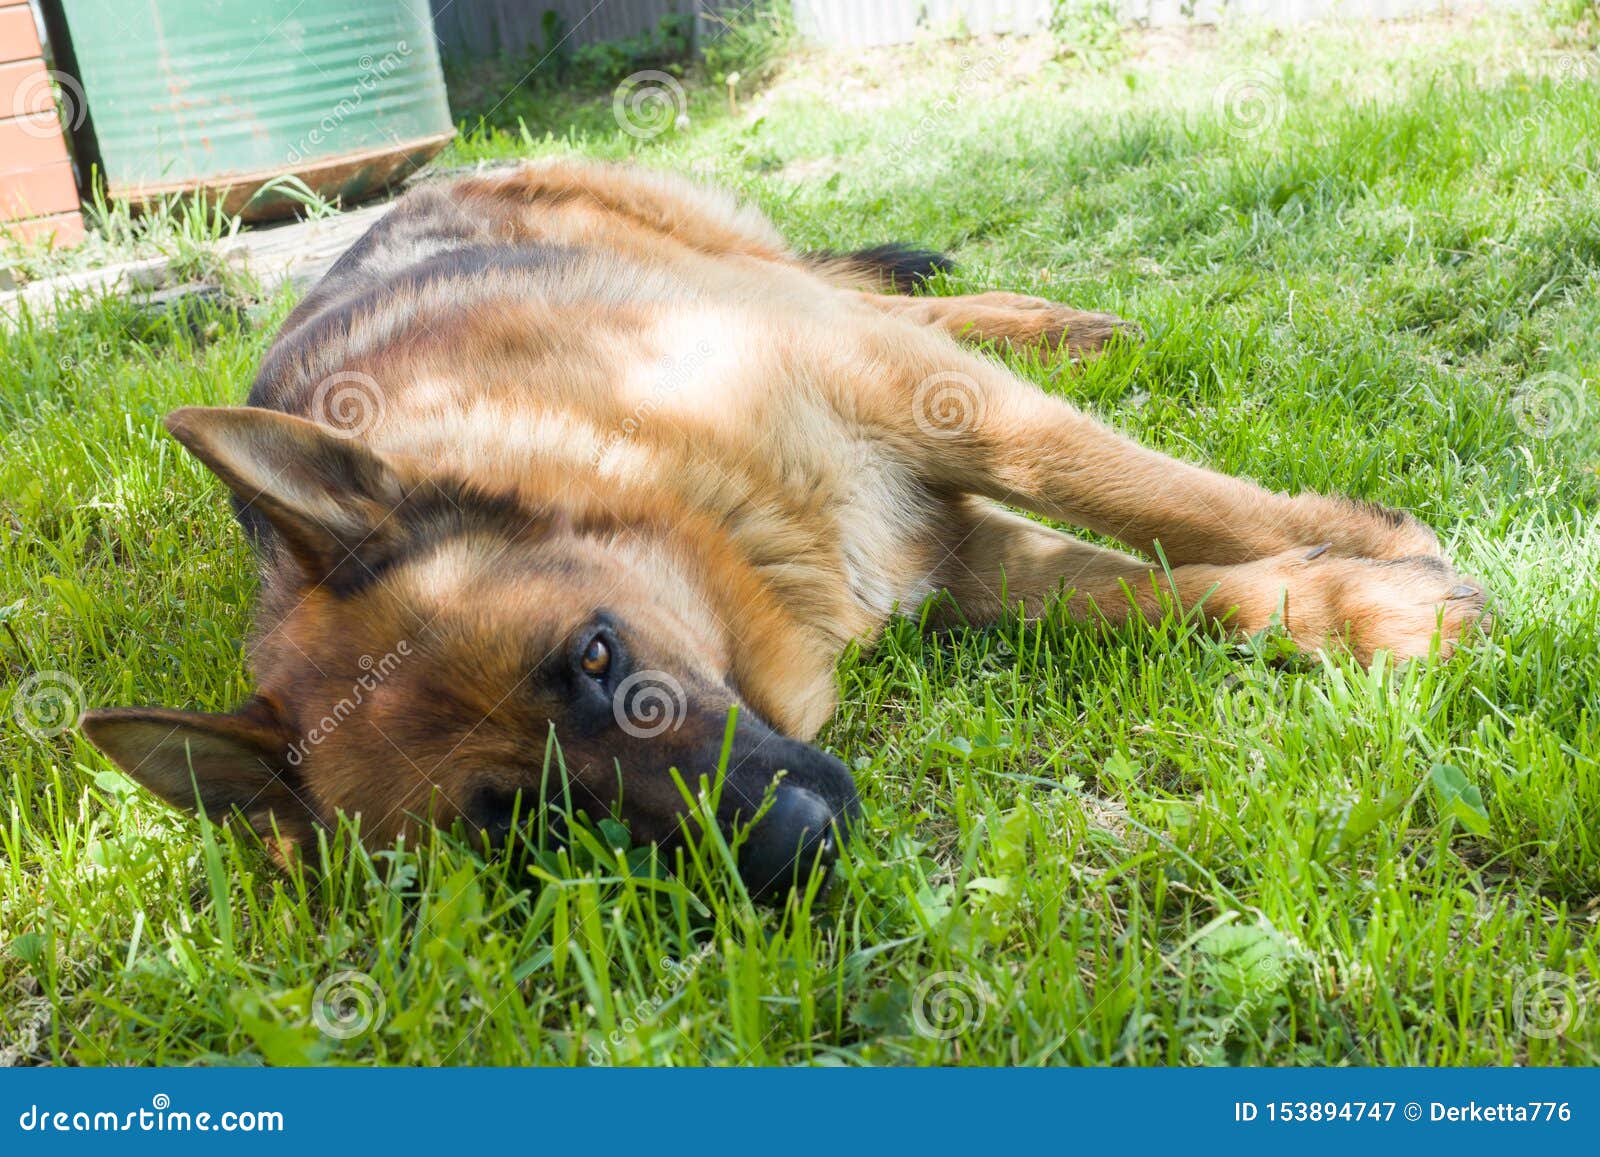 German Shepherd Lying Grass Stock Photos - Download 1,586 Royalty Free ...